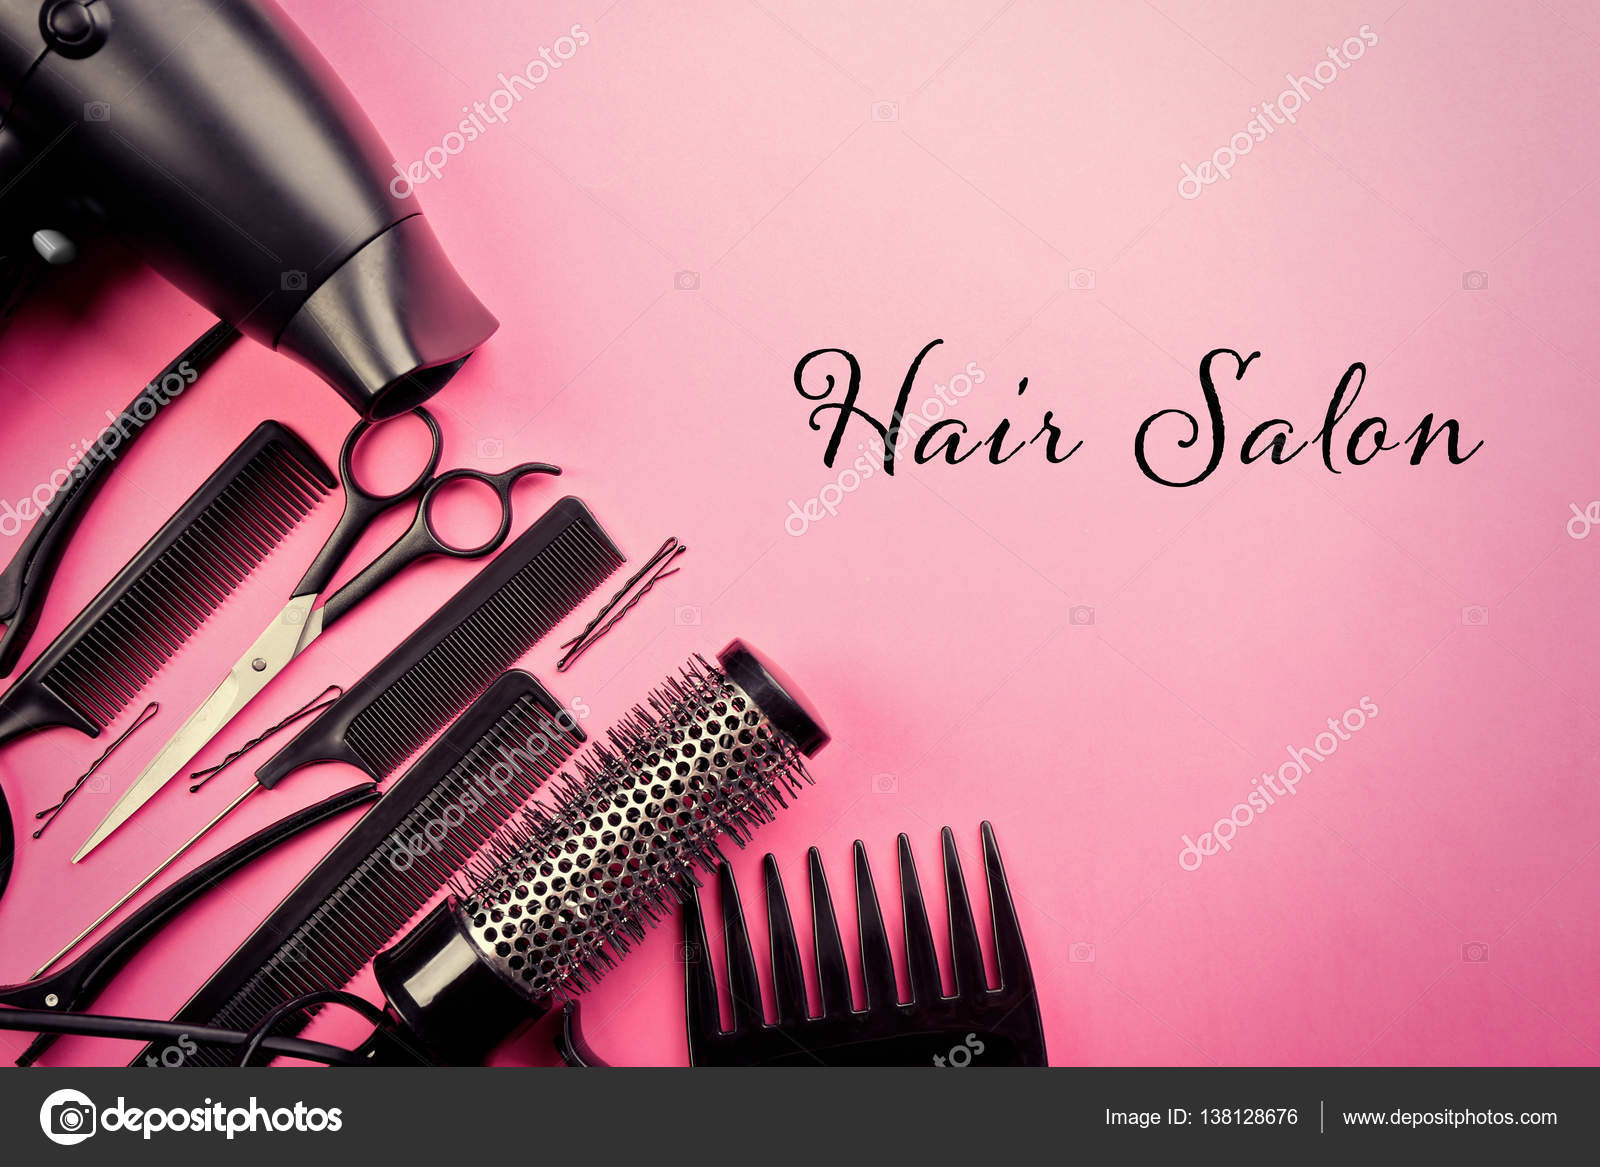 Hair salon Stock Photos, Royalty Free Hair salon Images | Depositphotos